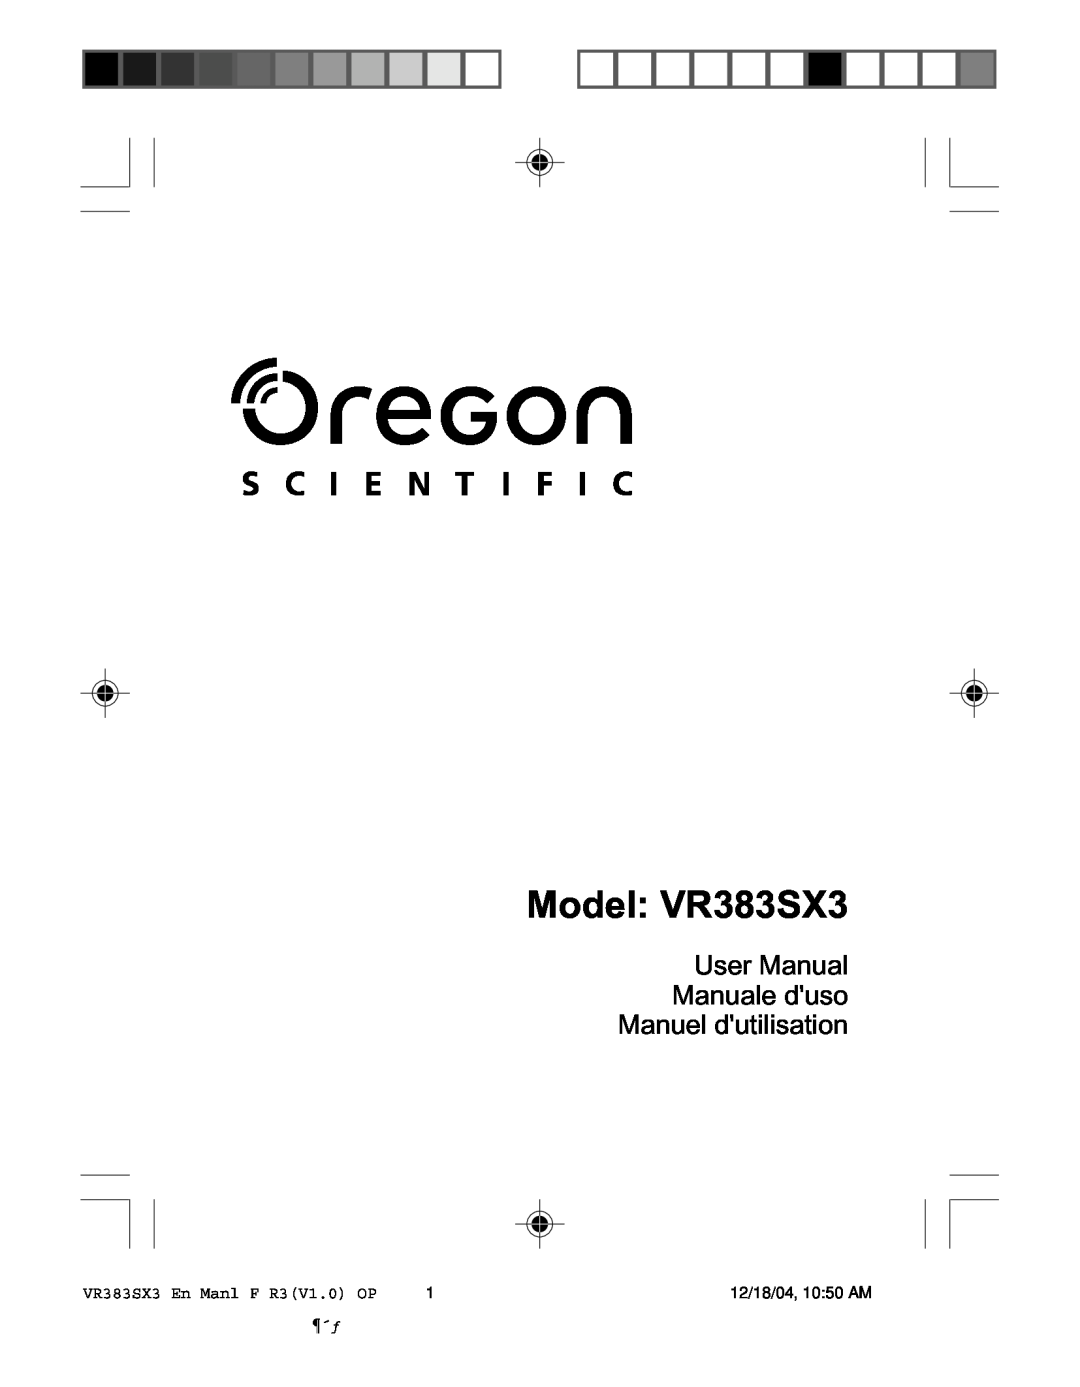 Oregon user manual Model VR383SX3, VR383SX3 En Manl F R3V1.0 OP 